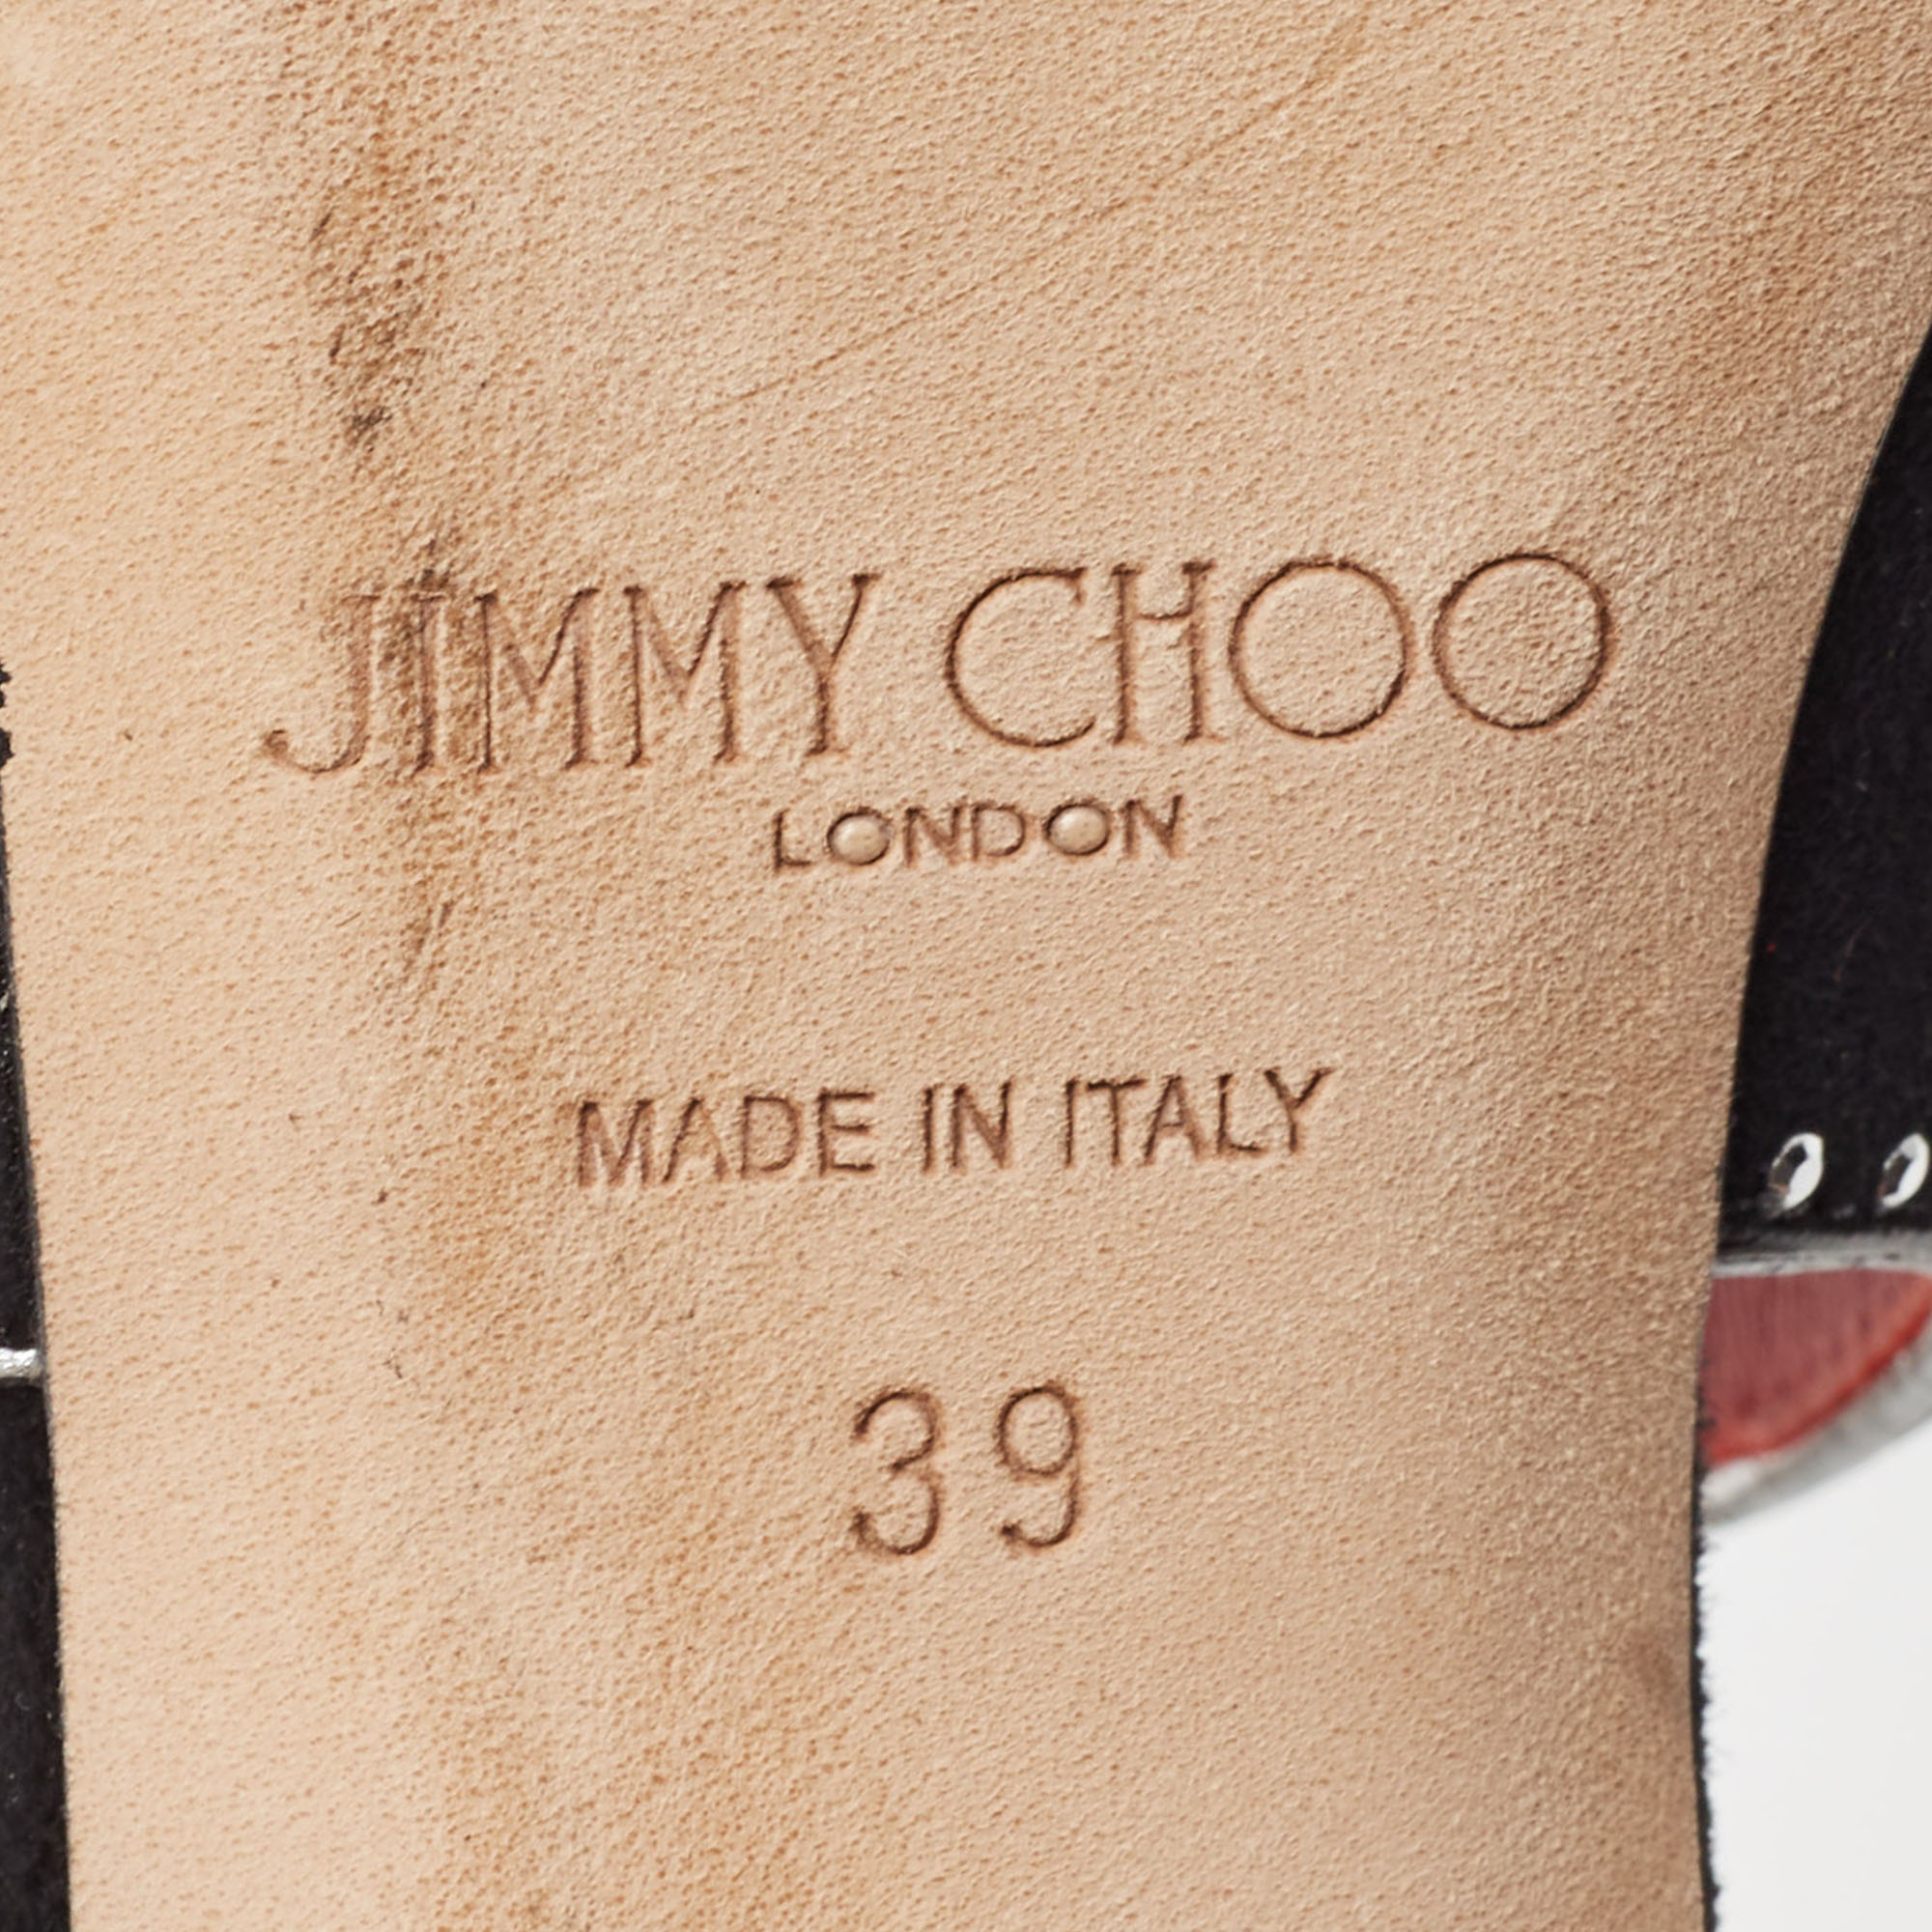 Jimmy Choo Black/Silver Suede Mahi Cutout Mule Sandals Size 39